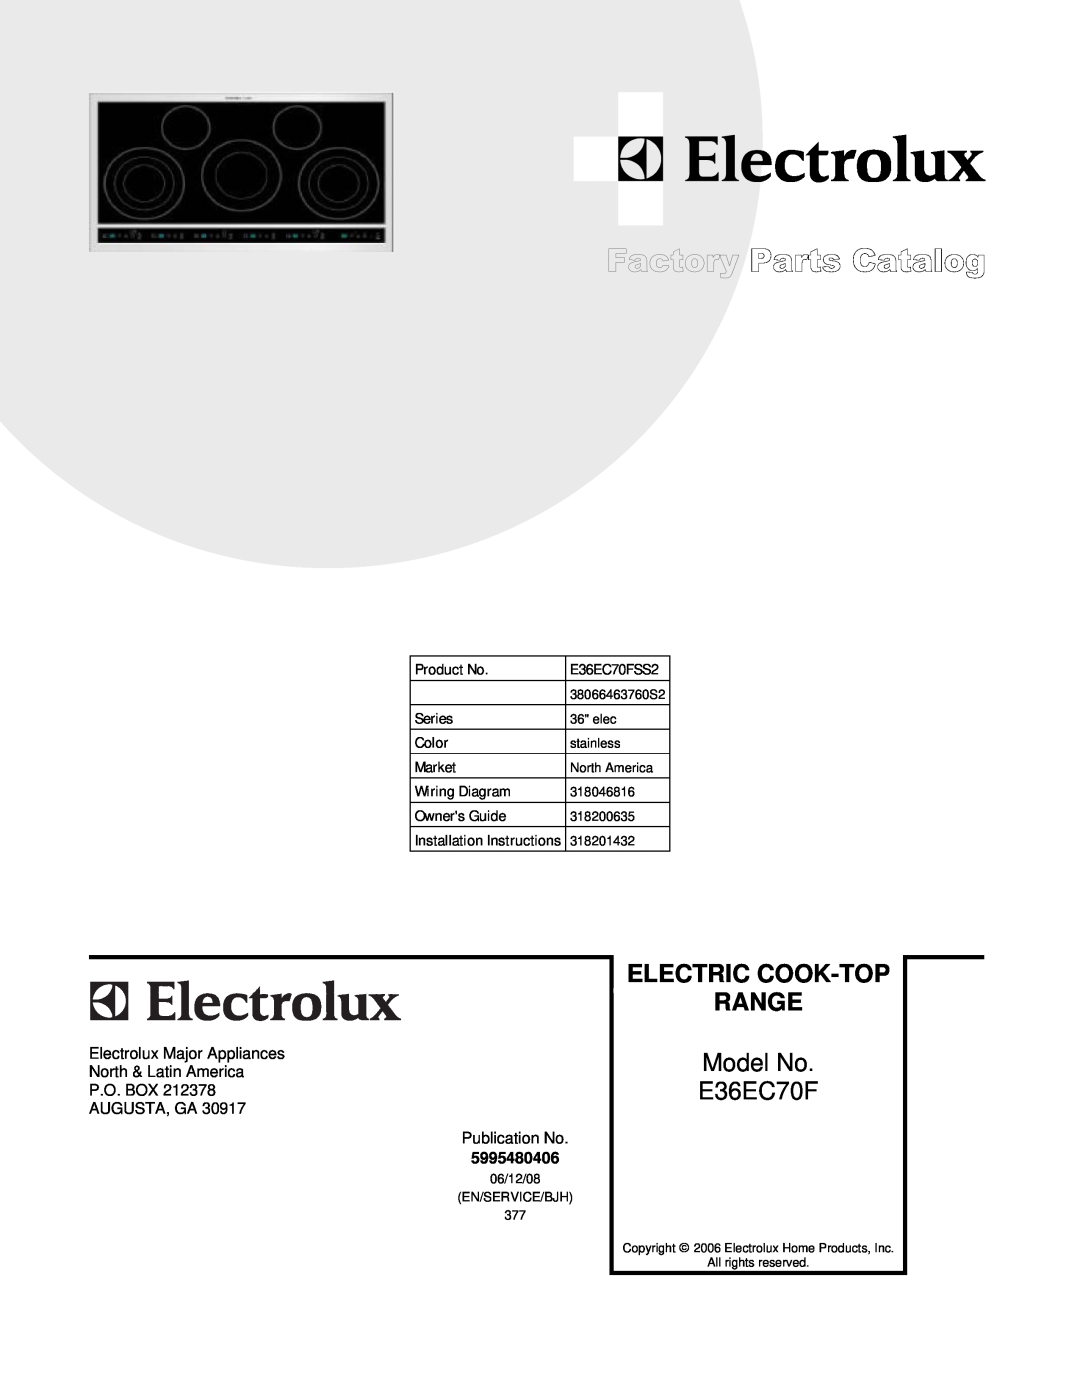 Electrolux E36EC70FSS2, 38066463760S2 installation instructions Range, Electric Cook-Top, Model No, 318046816.eps 